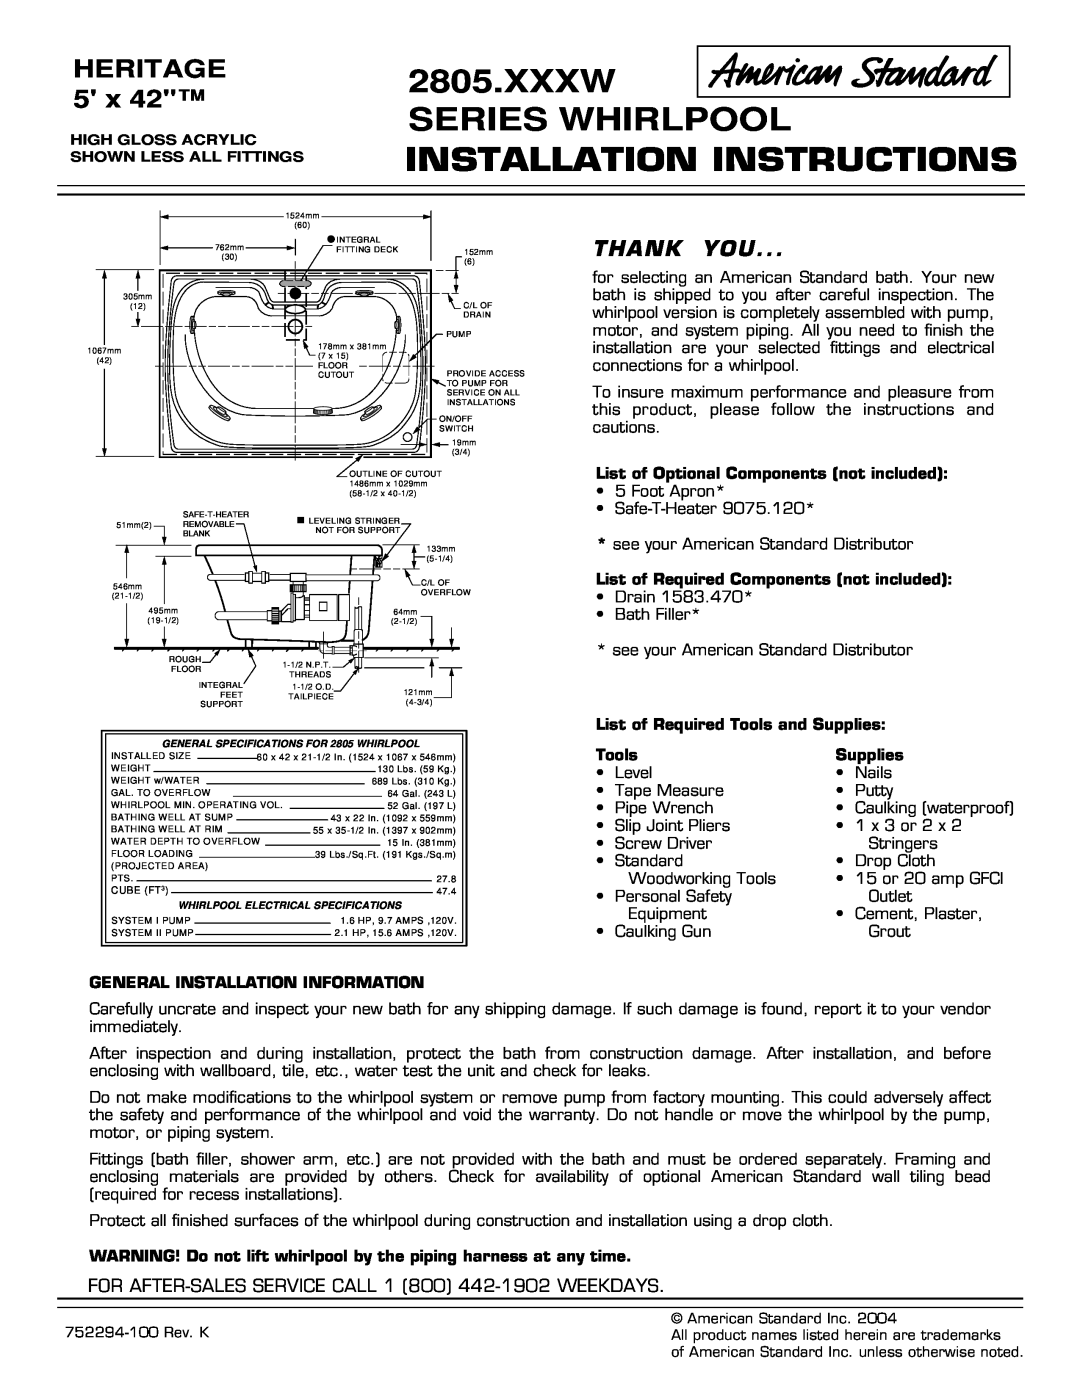 American Standard 2805.XXXW installation instructions Xxxw Series Whirlpool, Installation Instructions, Heritage, Tools 